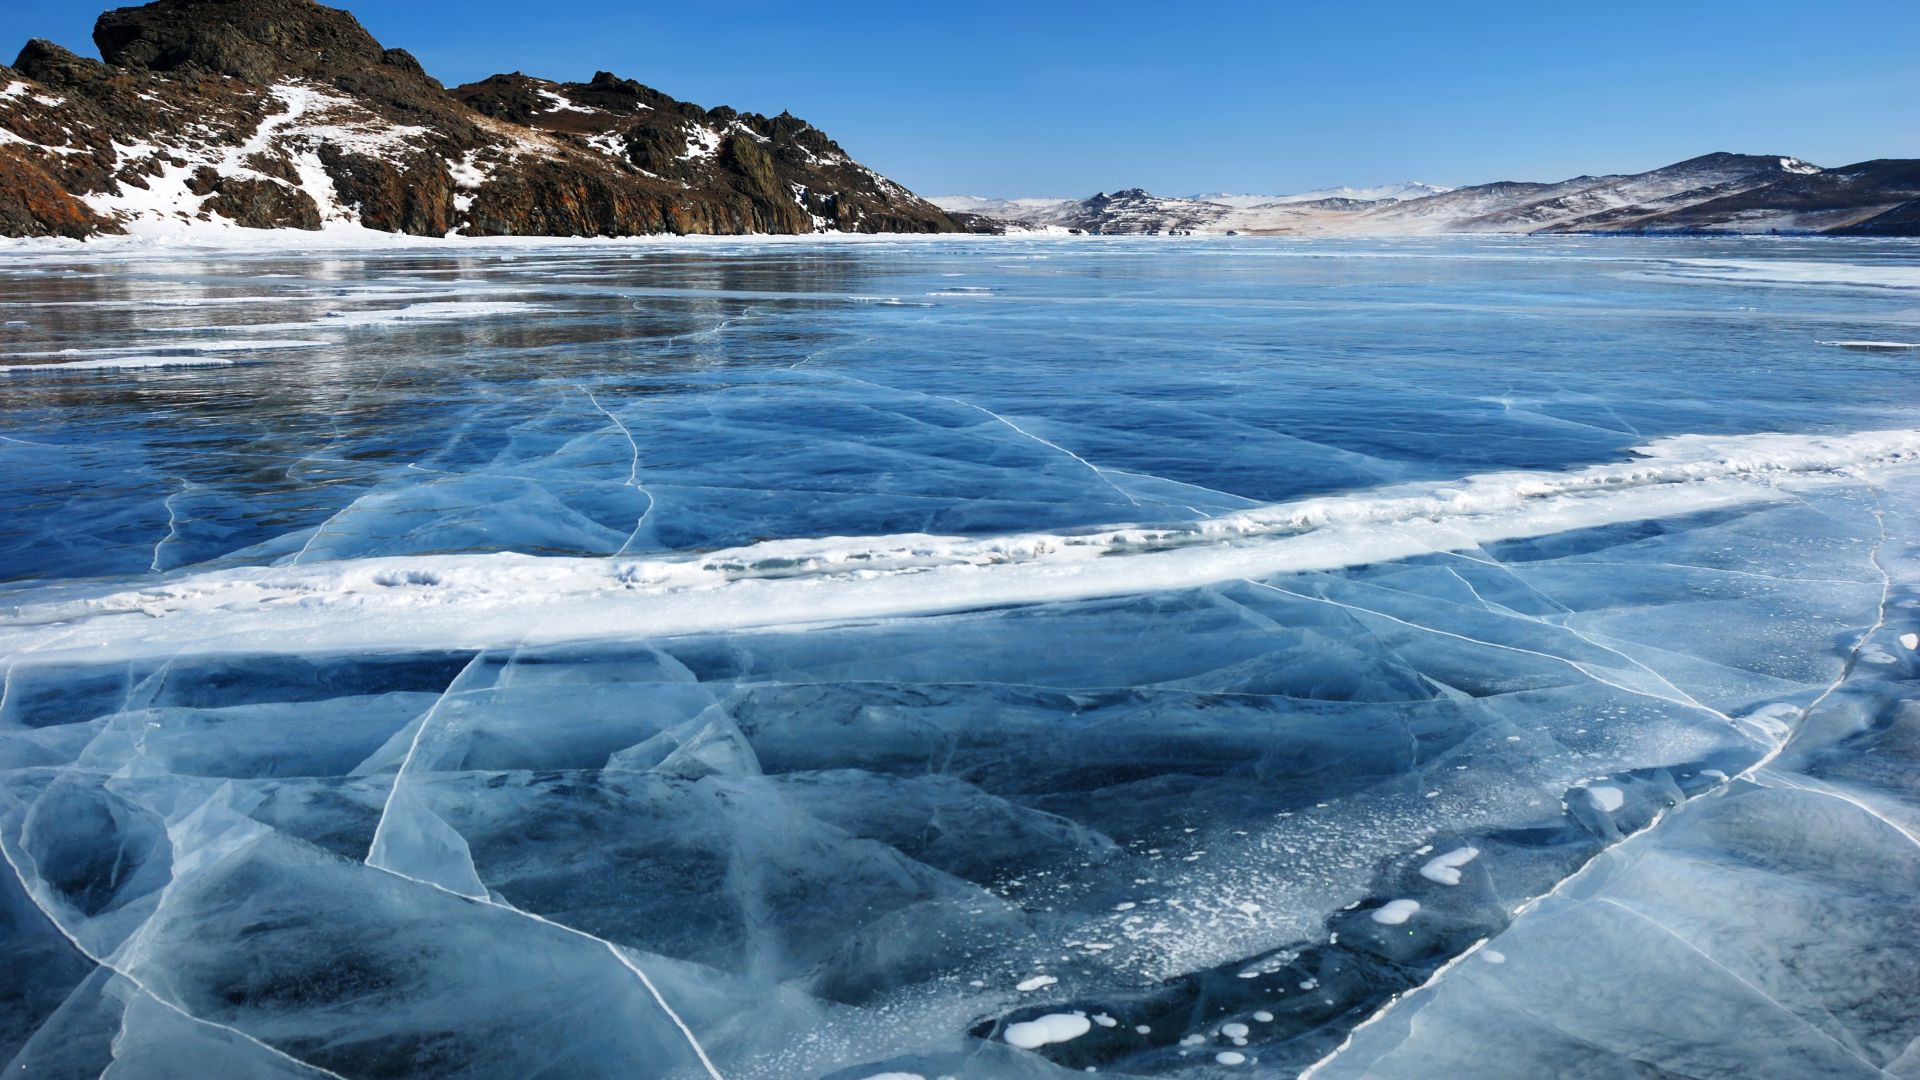 Байкал, 5k, 4k, 8k, лед, озеро, горы, Baikal, 5k, 4k wallpaper, 8k, ice, lake, mountains (horizontal)